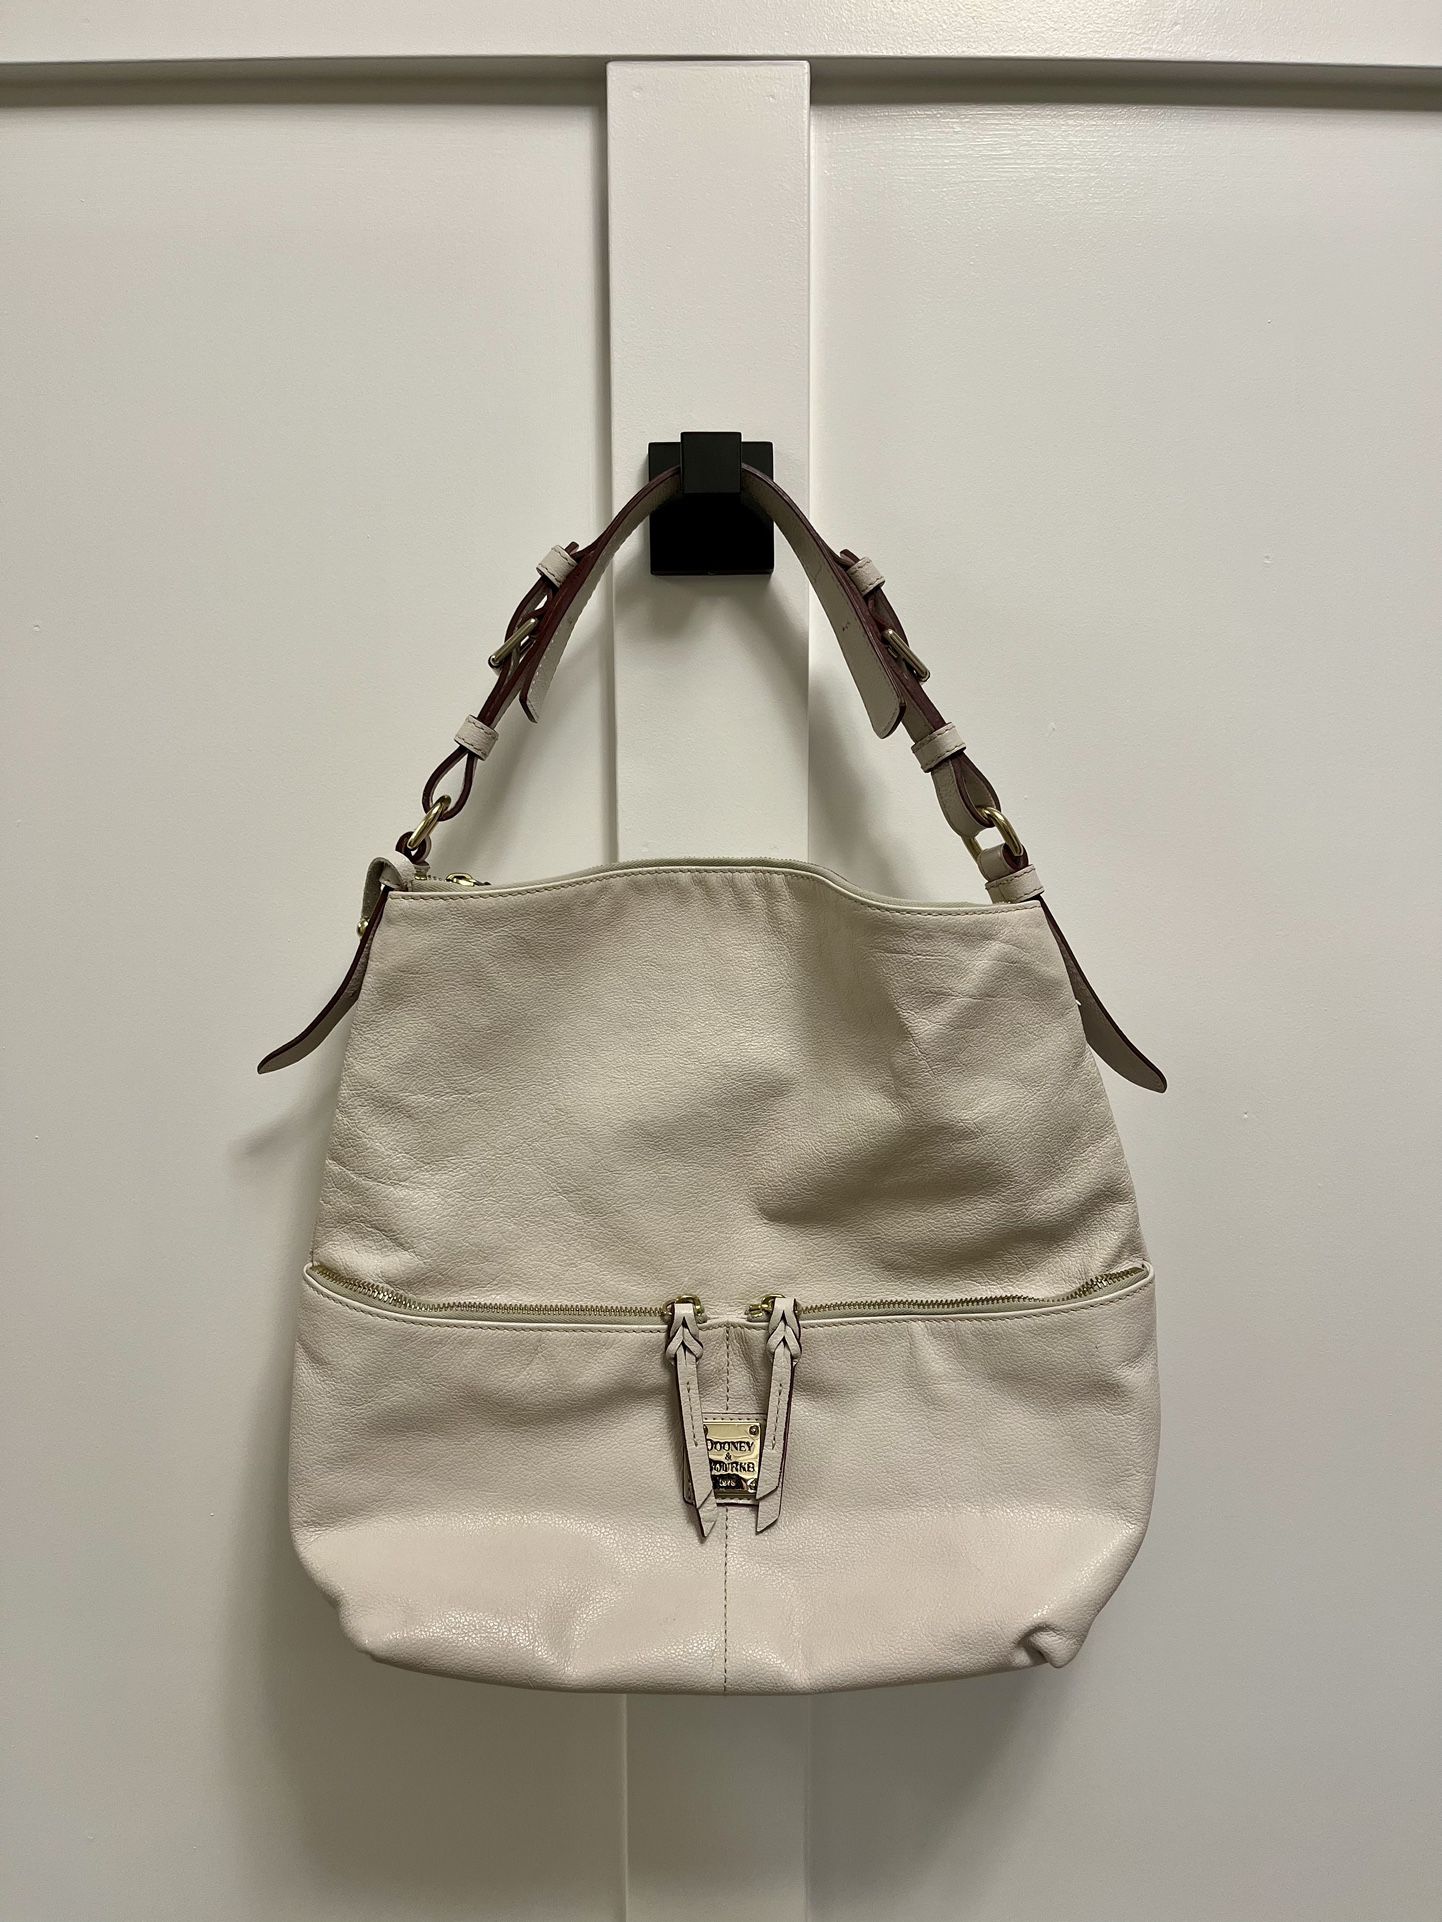 Dooney & Bourke 1975 Beige / Cream Leather Shoulder Satchel Purse Bag Handbag